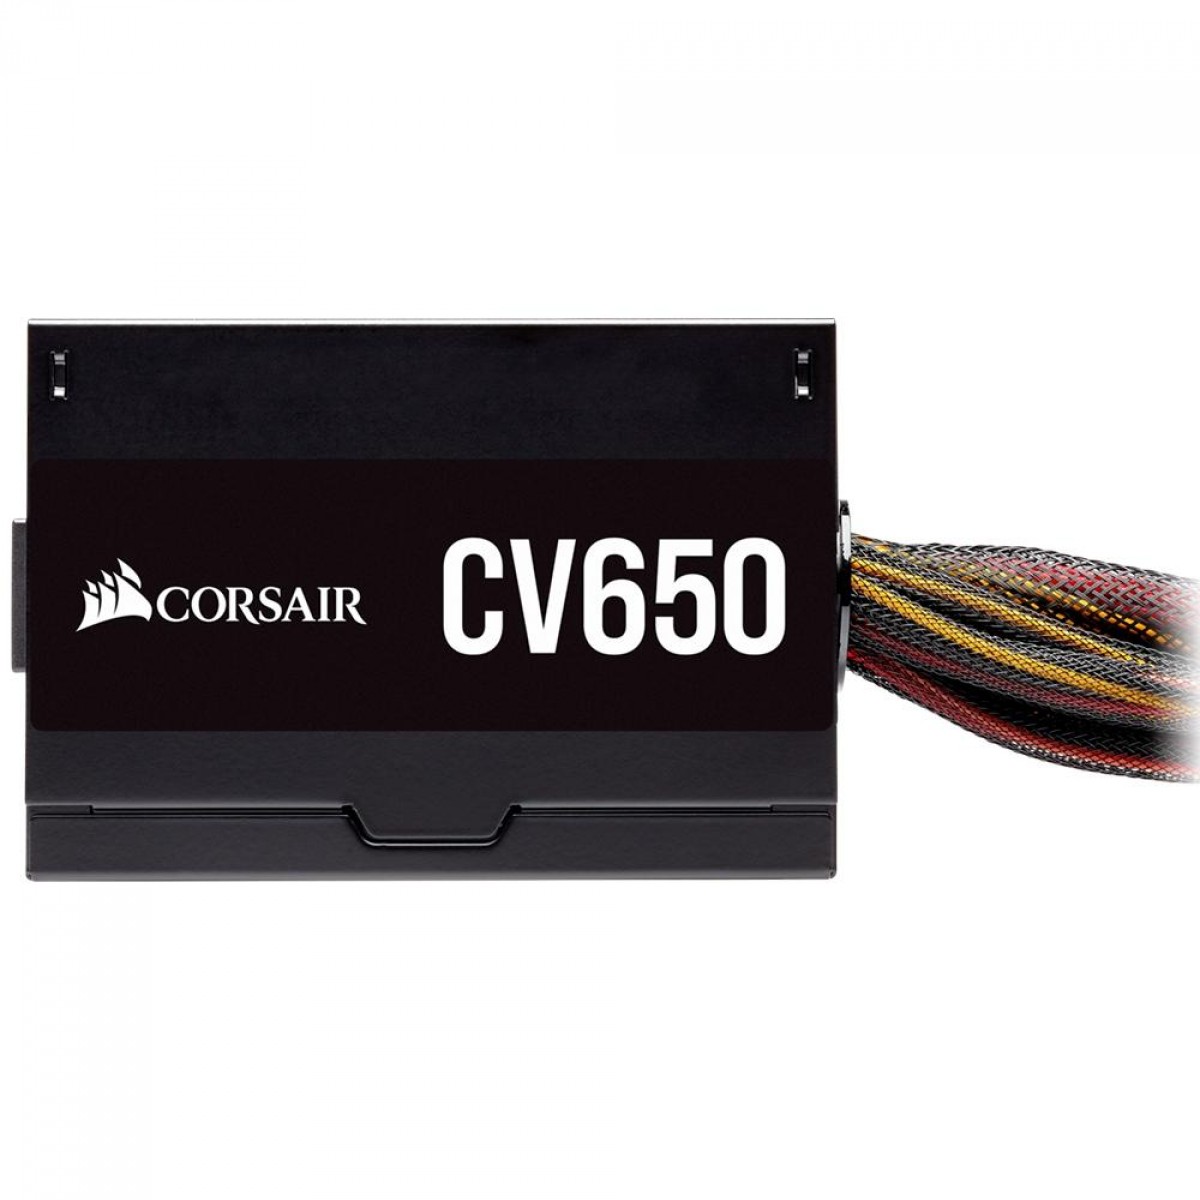 Fonte Corsair CV650, 650W, 80 Plus Bronze - CP-9020211-BR